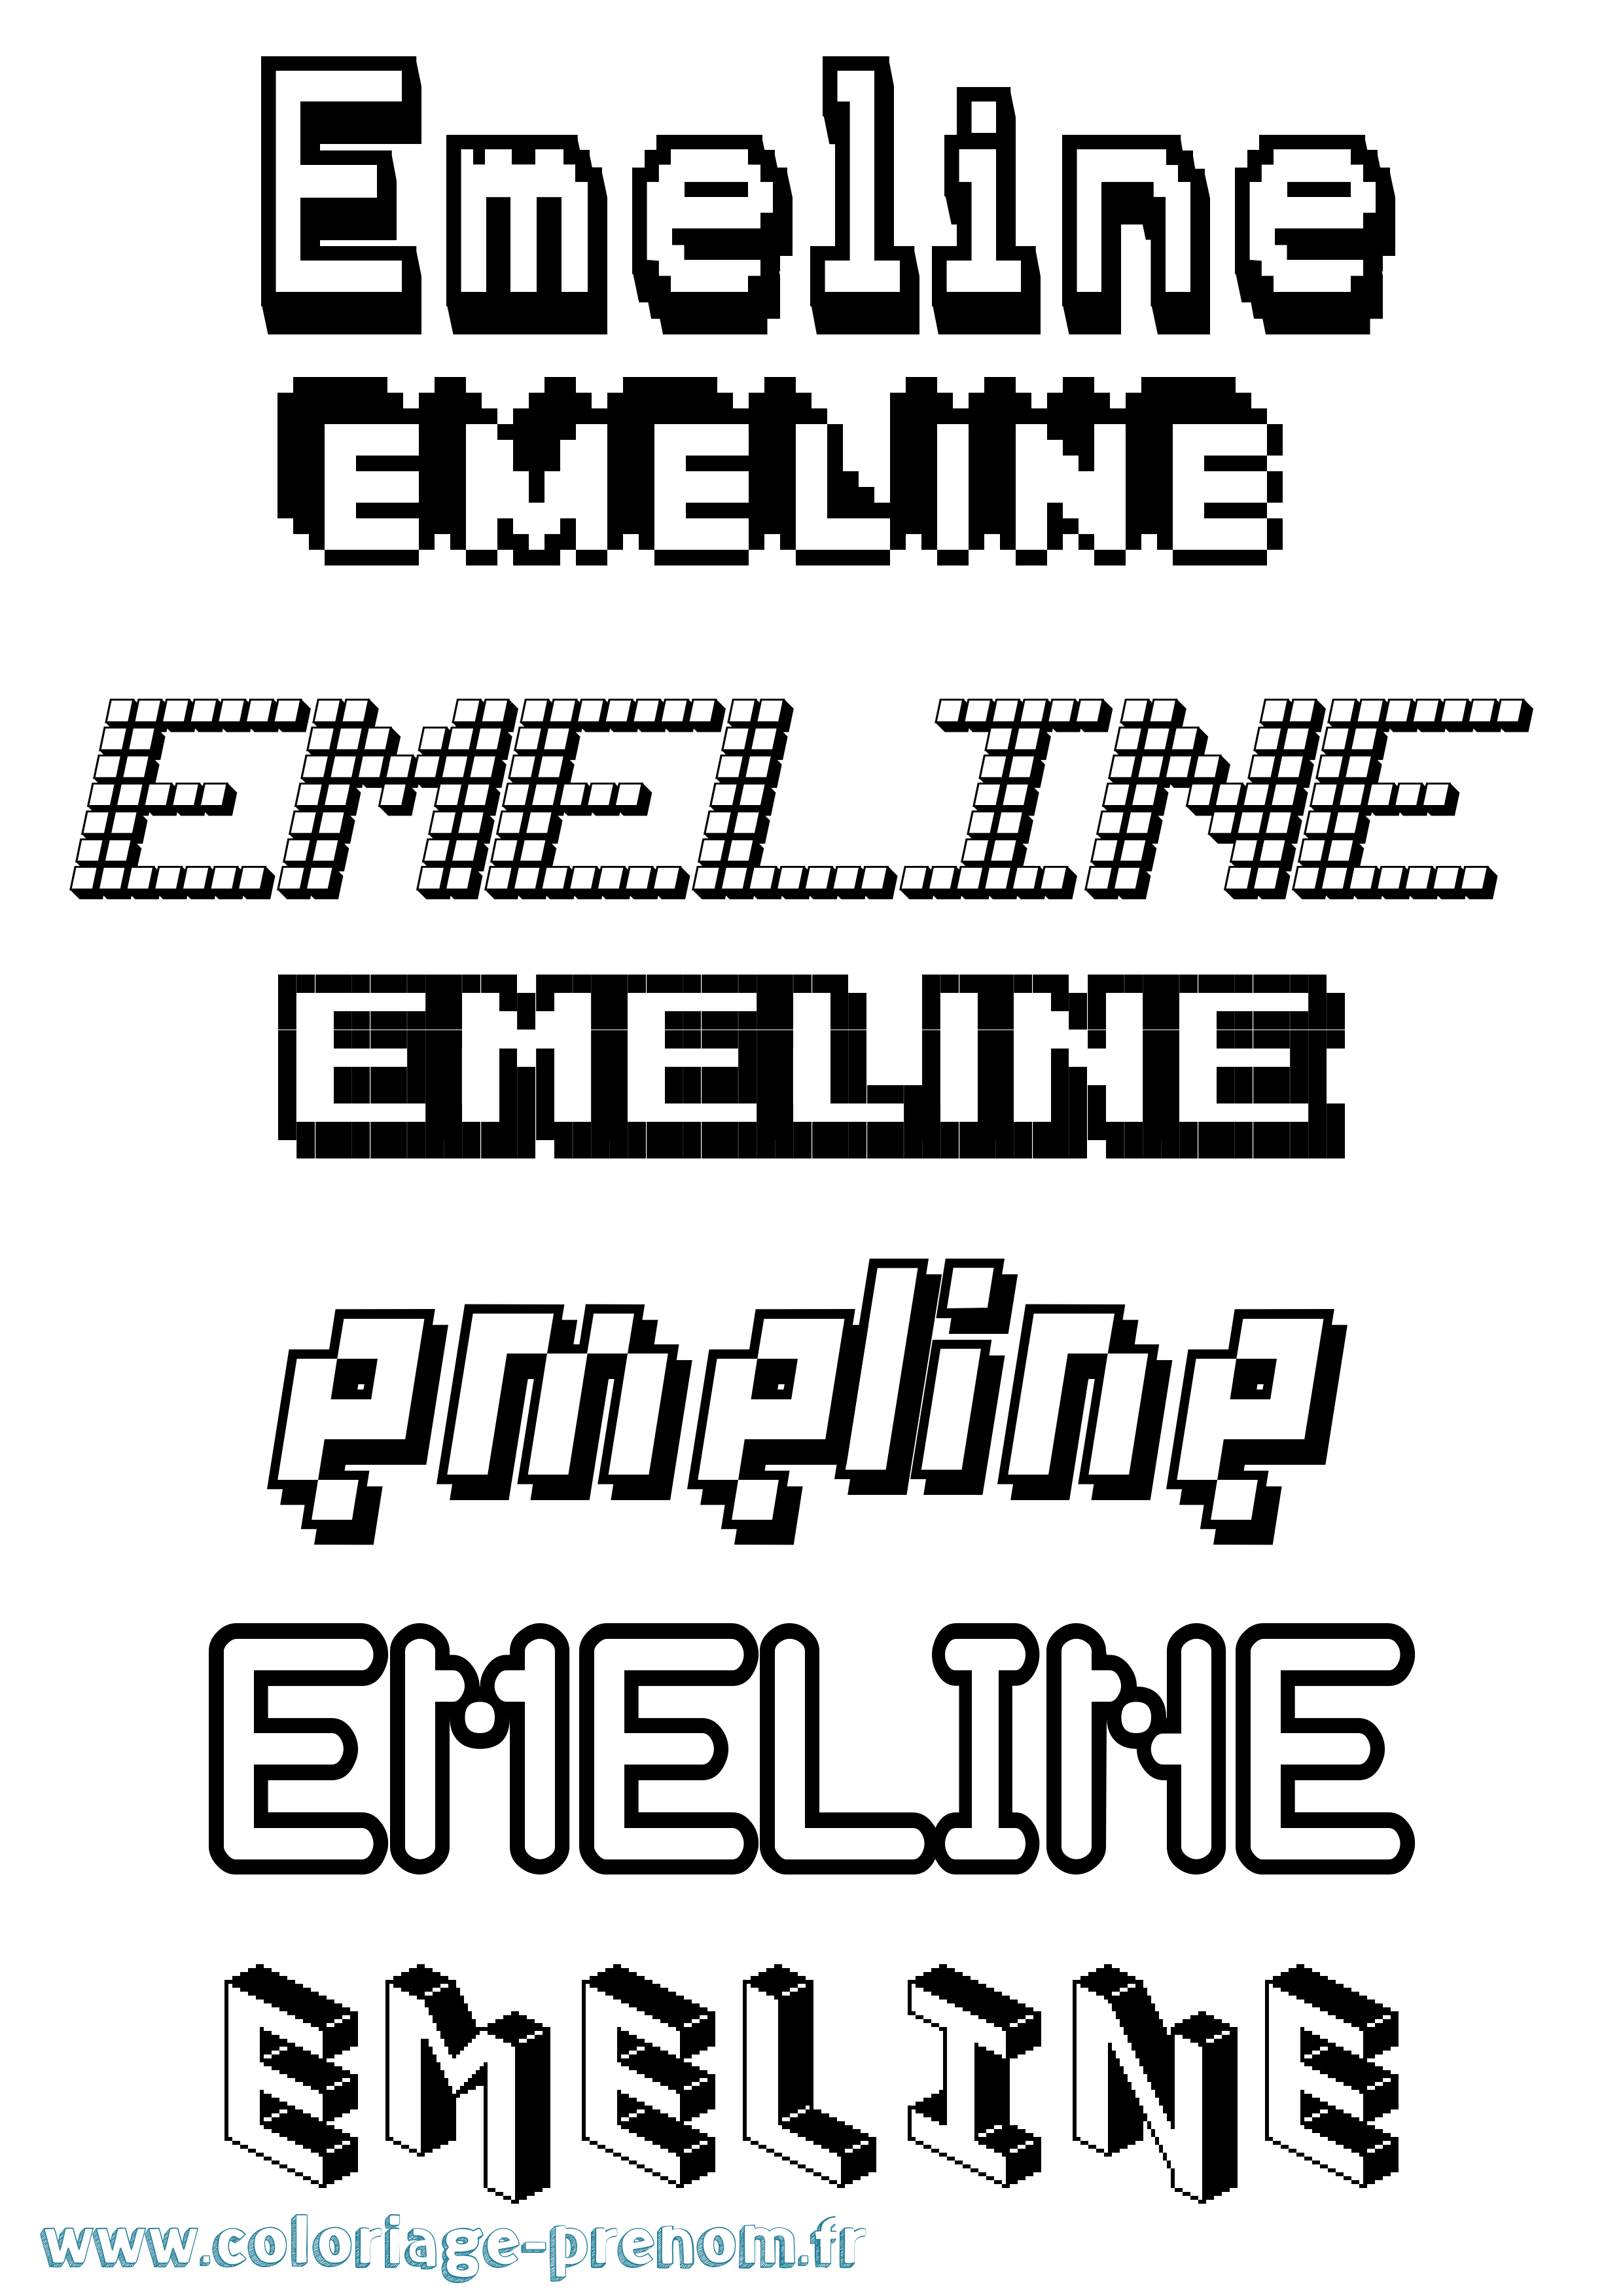 Coloriage prénom Emeline Pixel